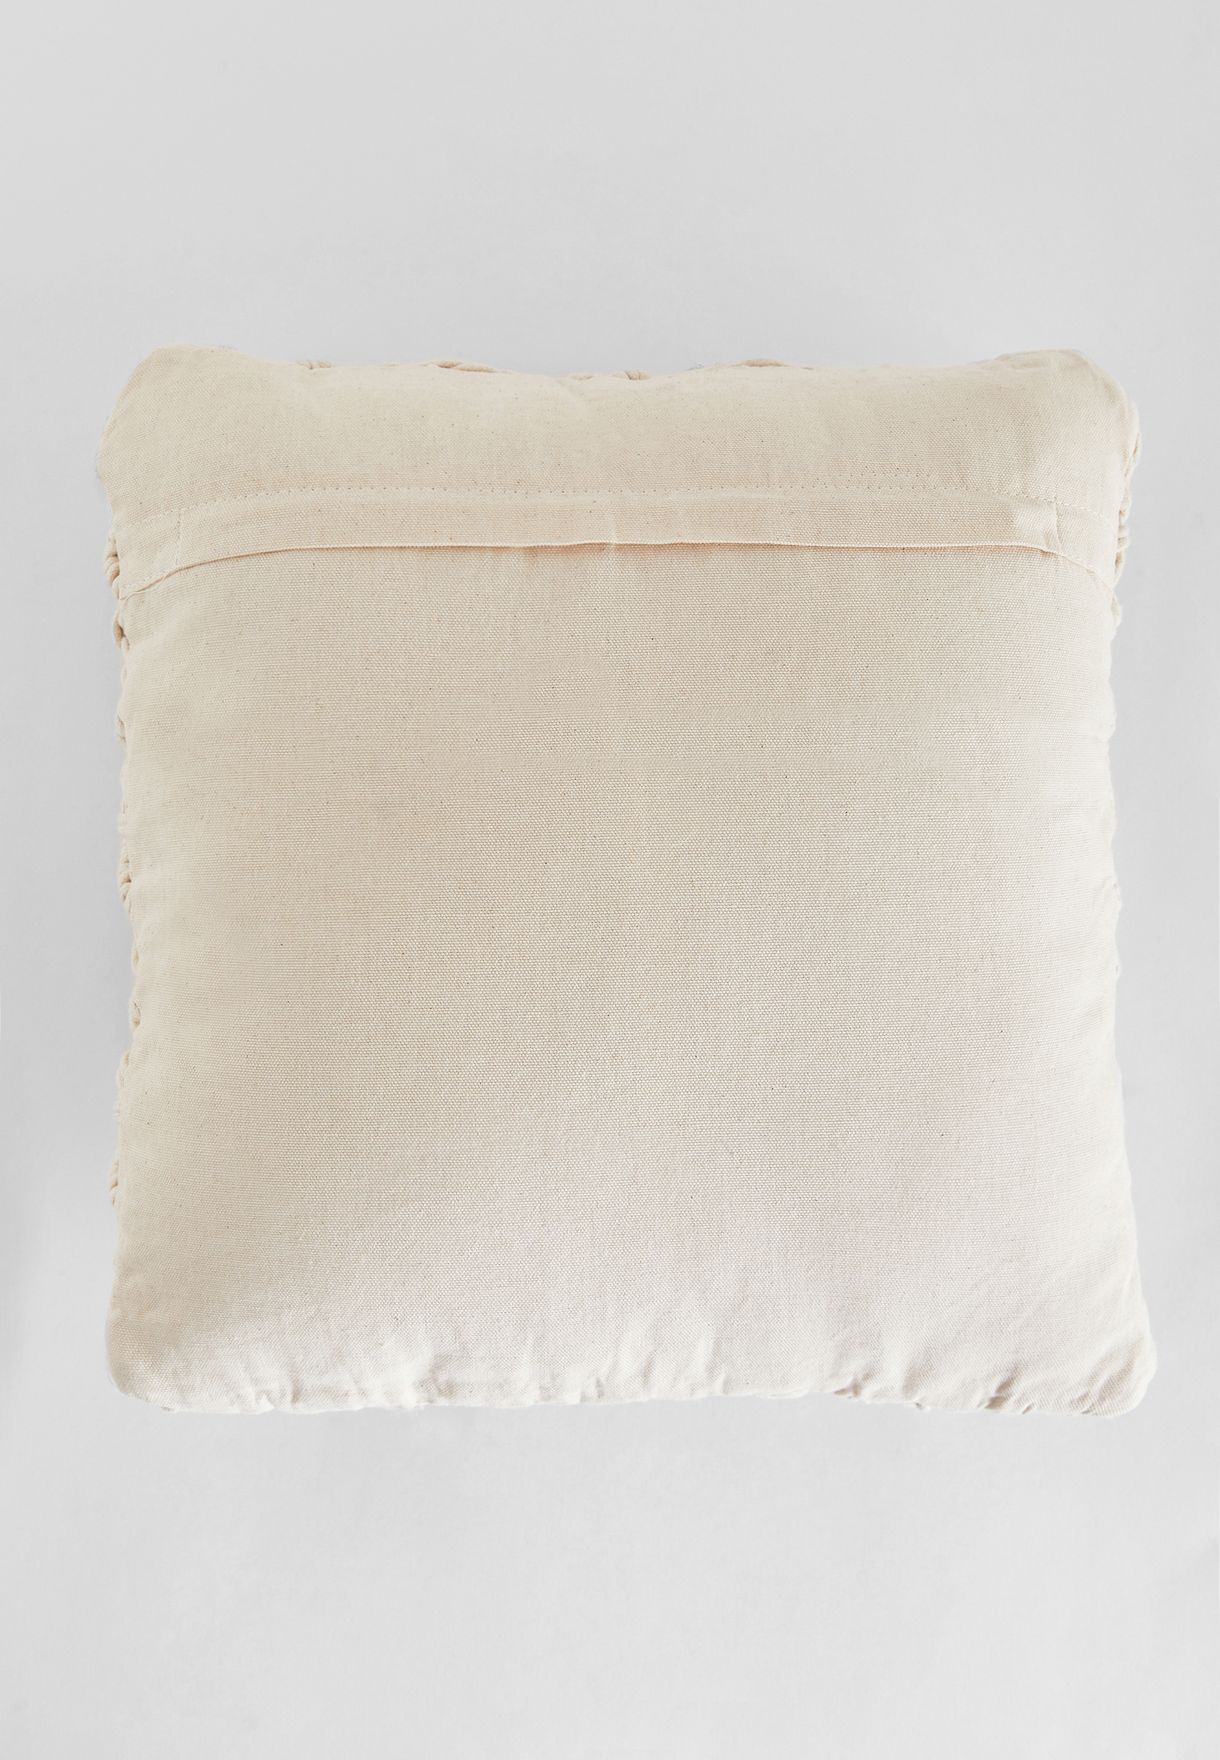 Macrame Cushion With Insert